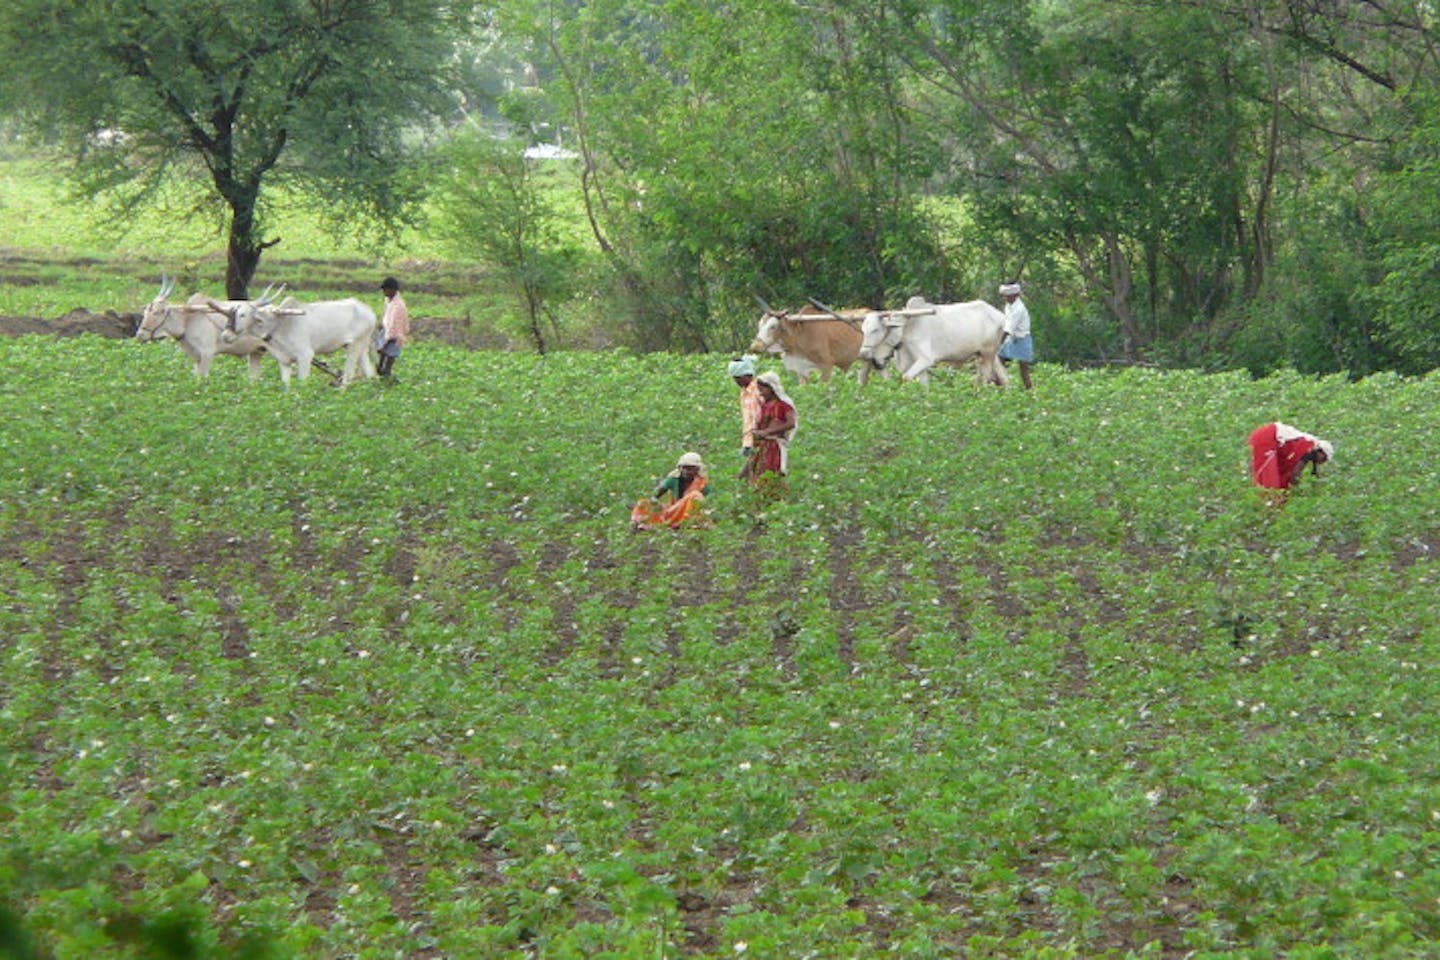 cotton field india